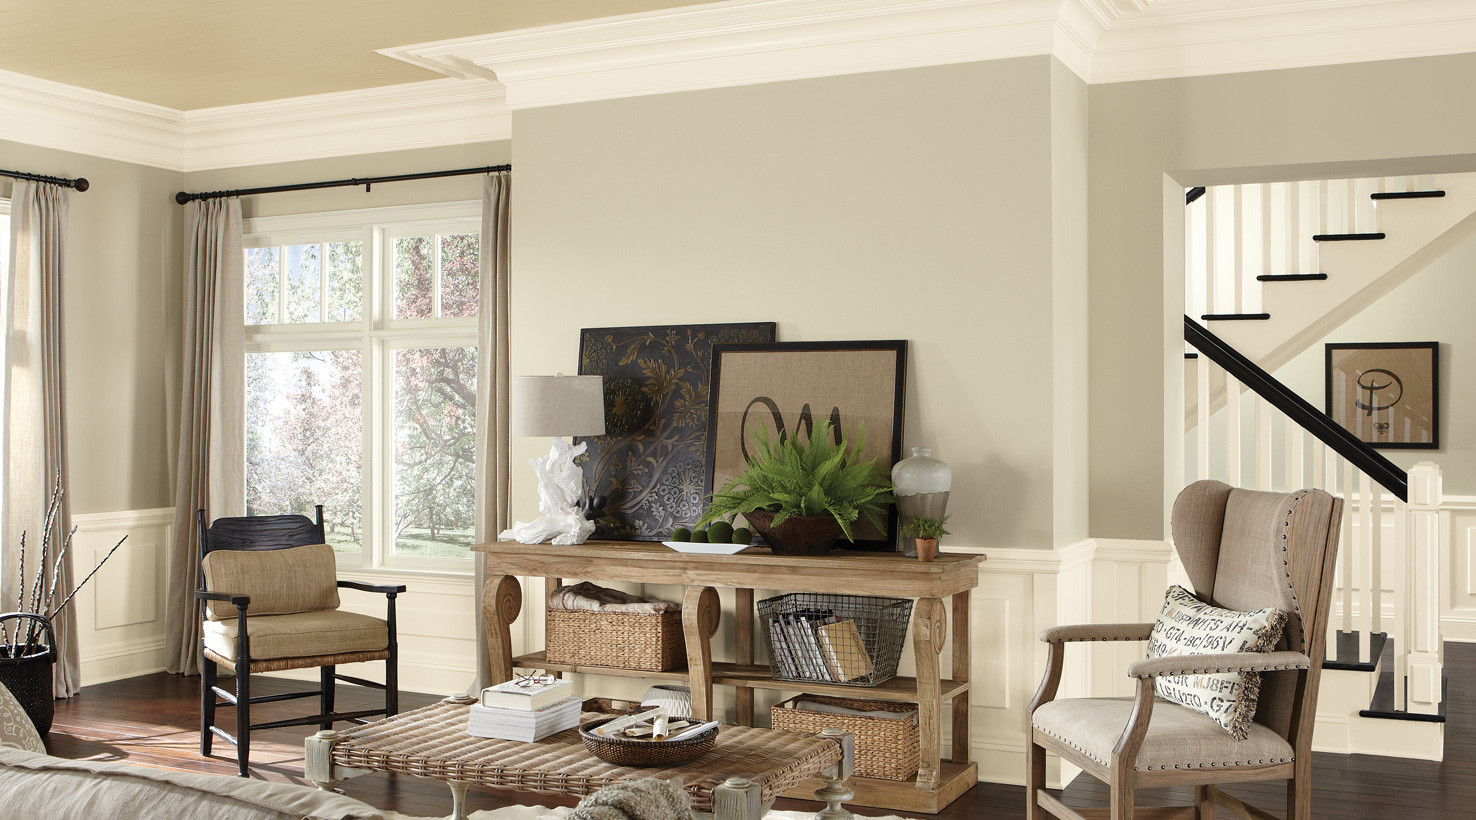 Best ideas about Popular Paint Colors For Living Rooms
. Save or Pin Living Room Paint Color Ideas Now.